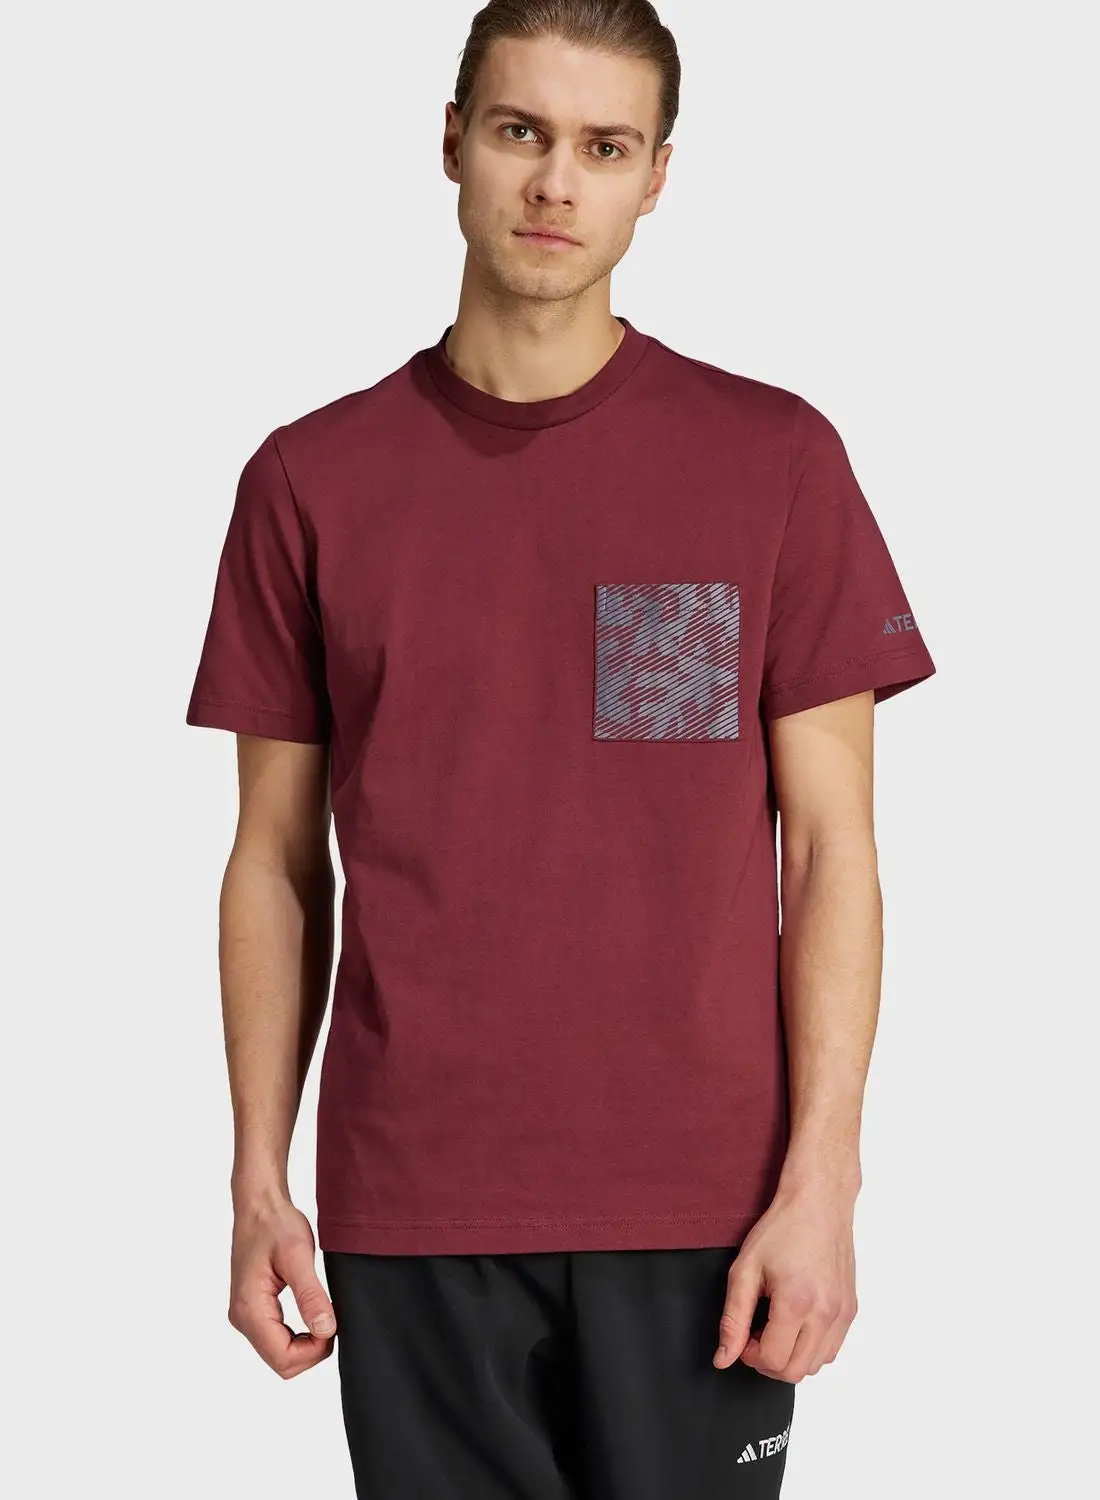 Adidas Terrex Graphic Pocket Print T-Shirt